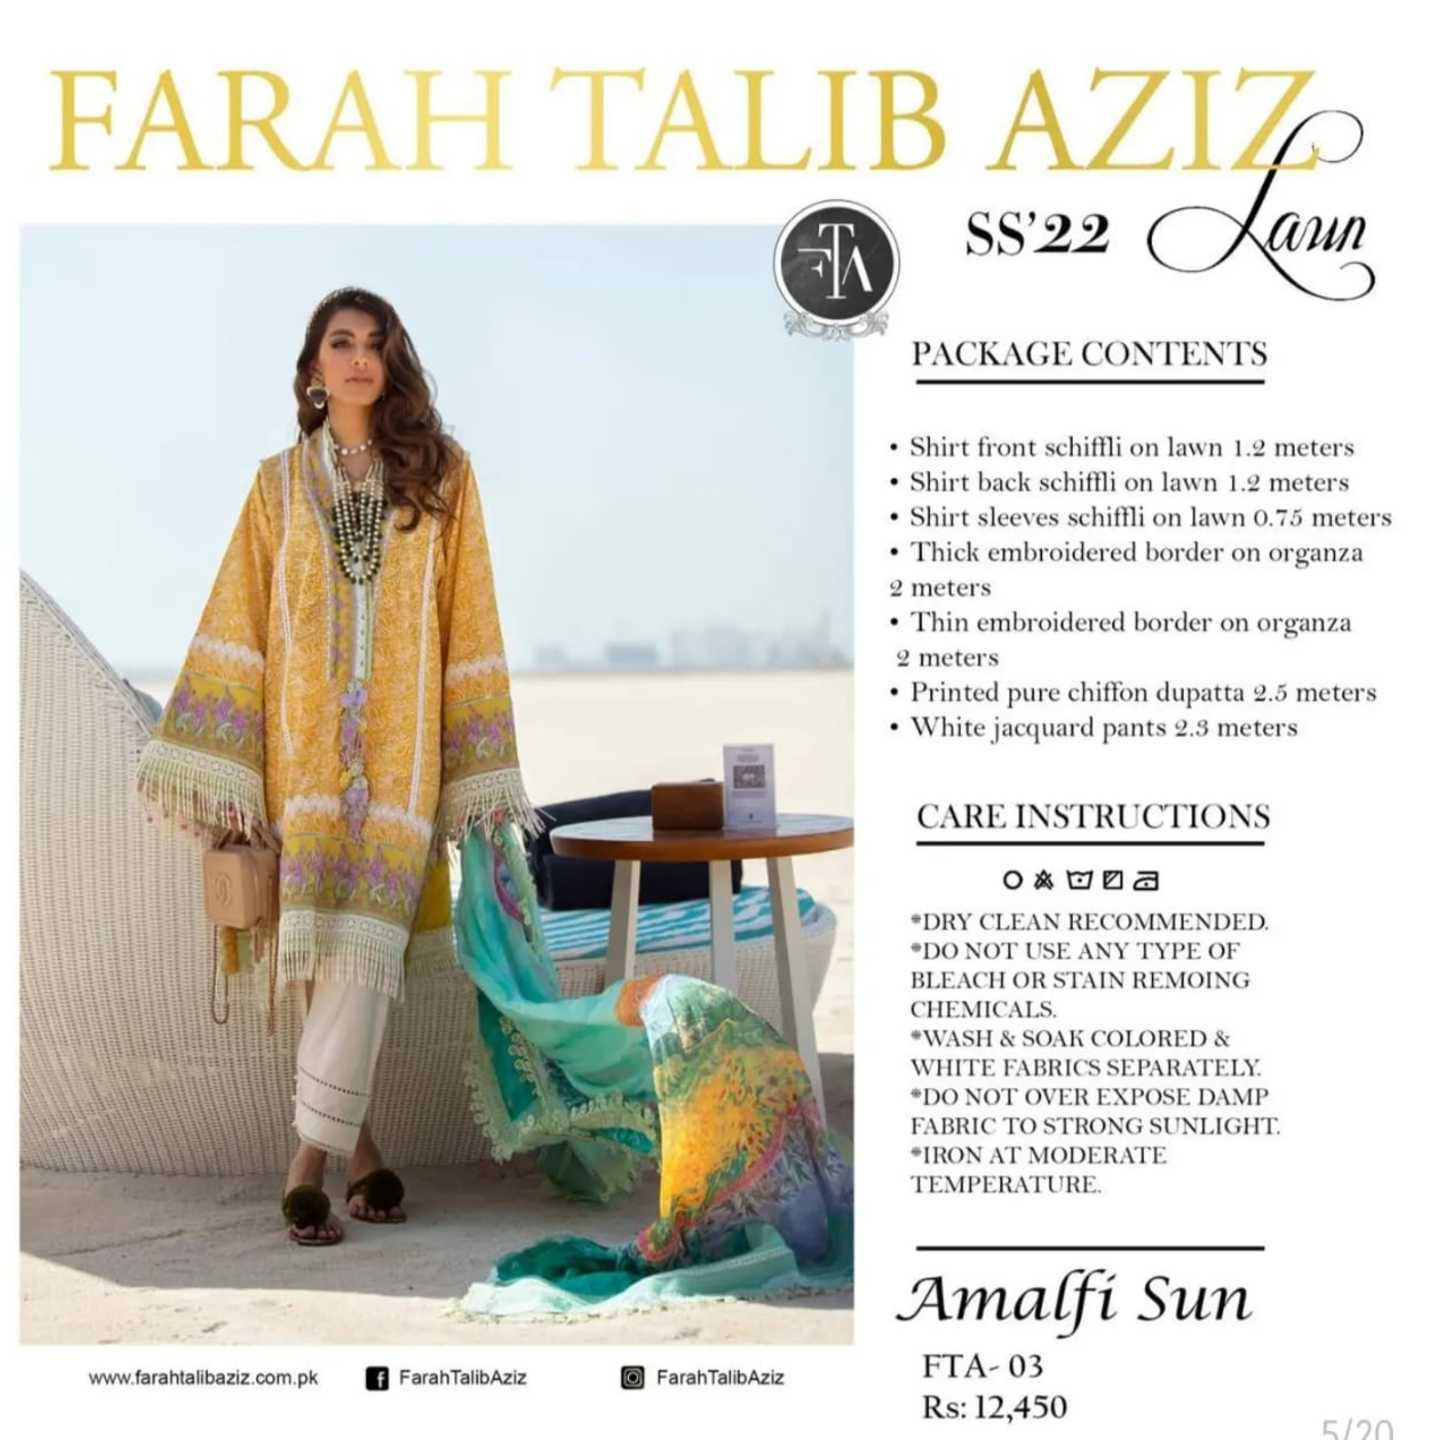 Farah Talib Aziz Luxury Lawn22